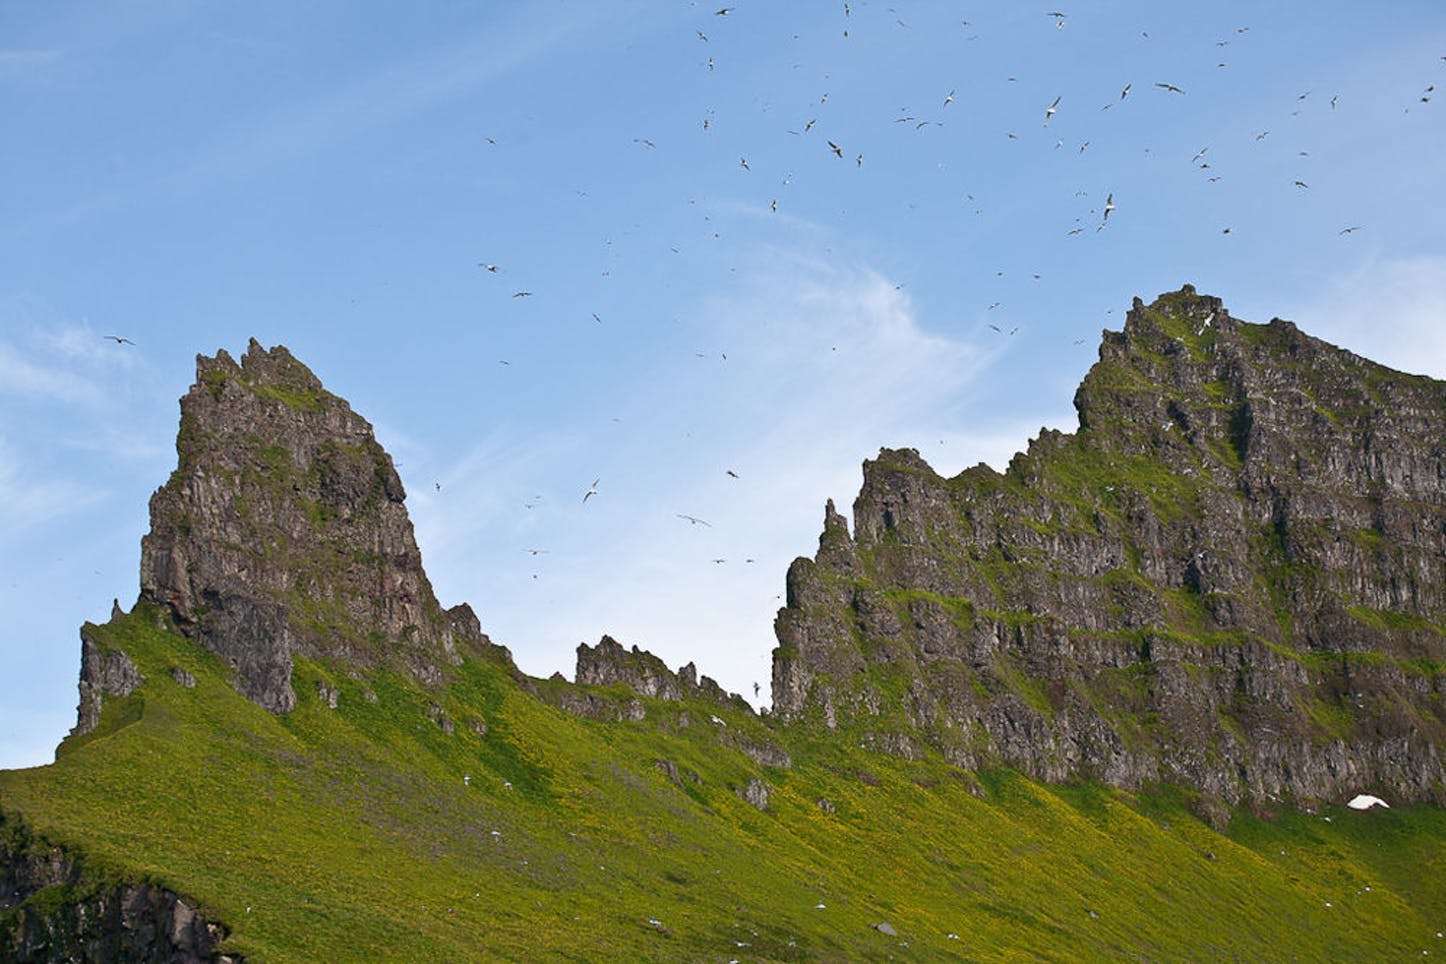 The Hornbjarg cliffs are beautiful.